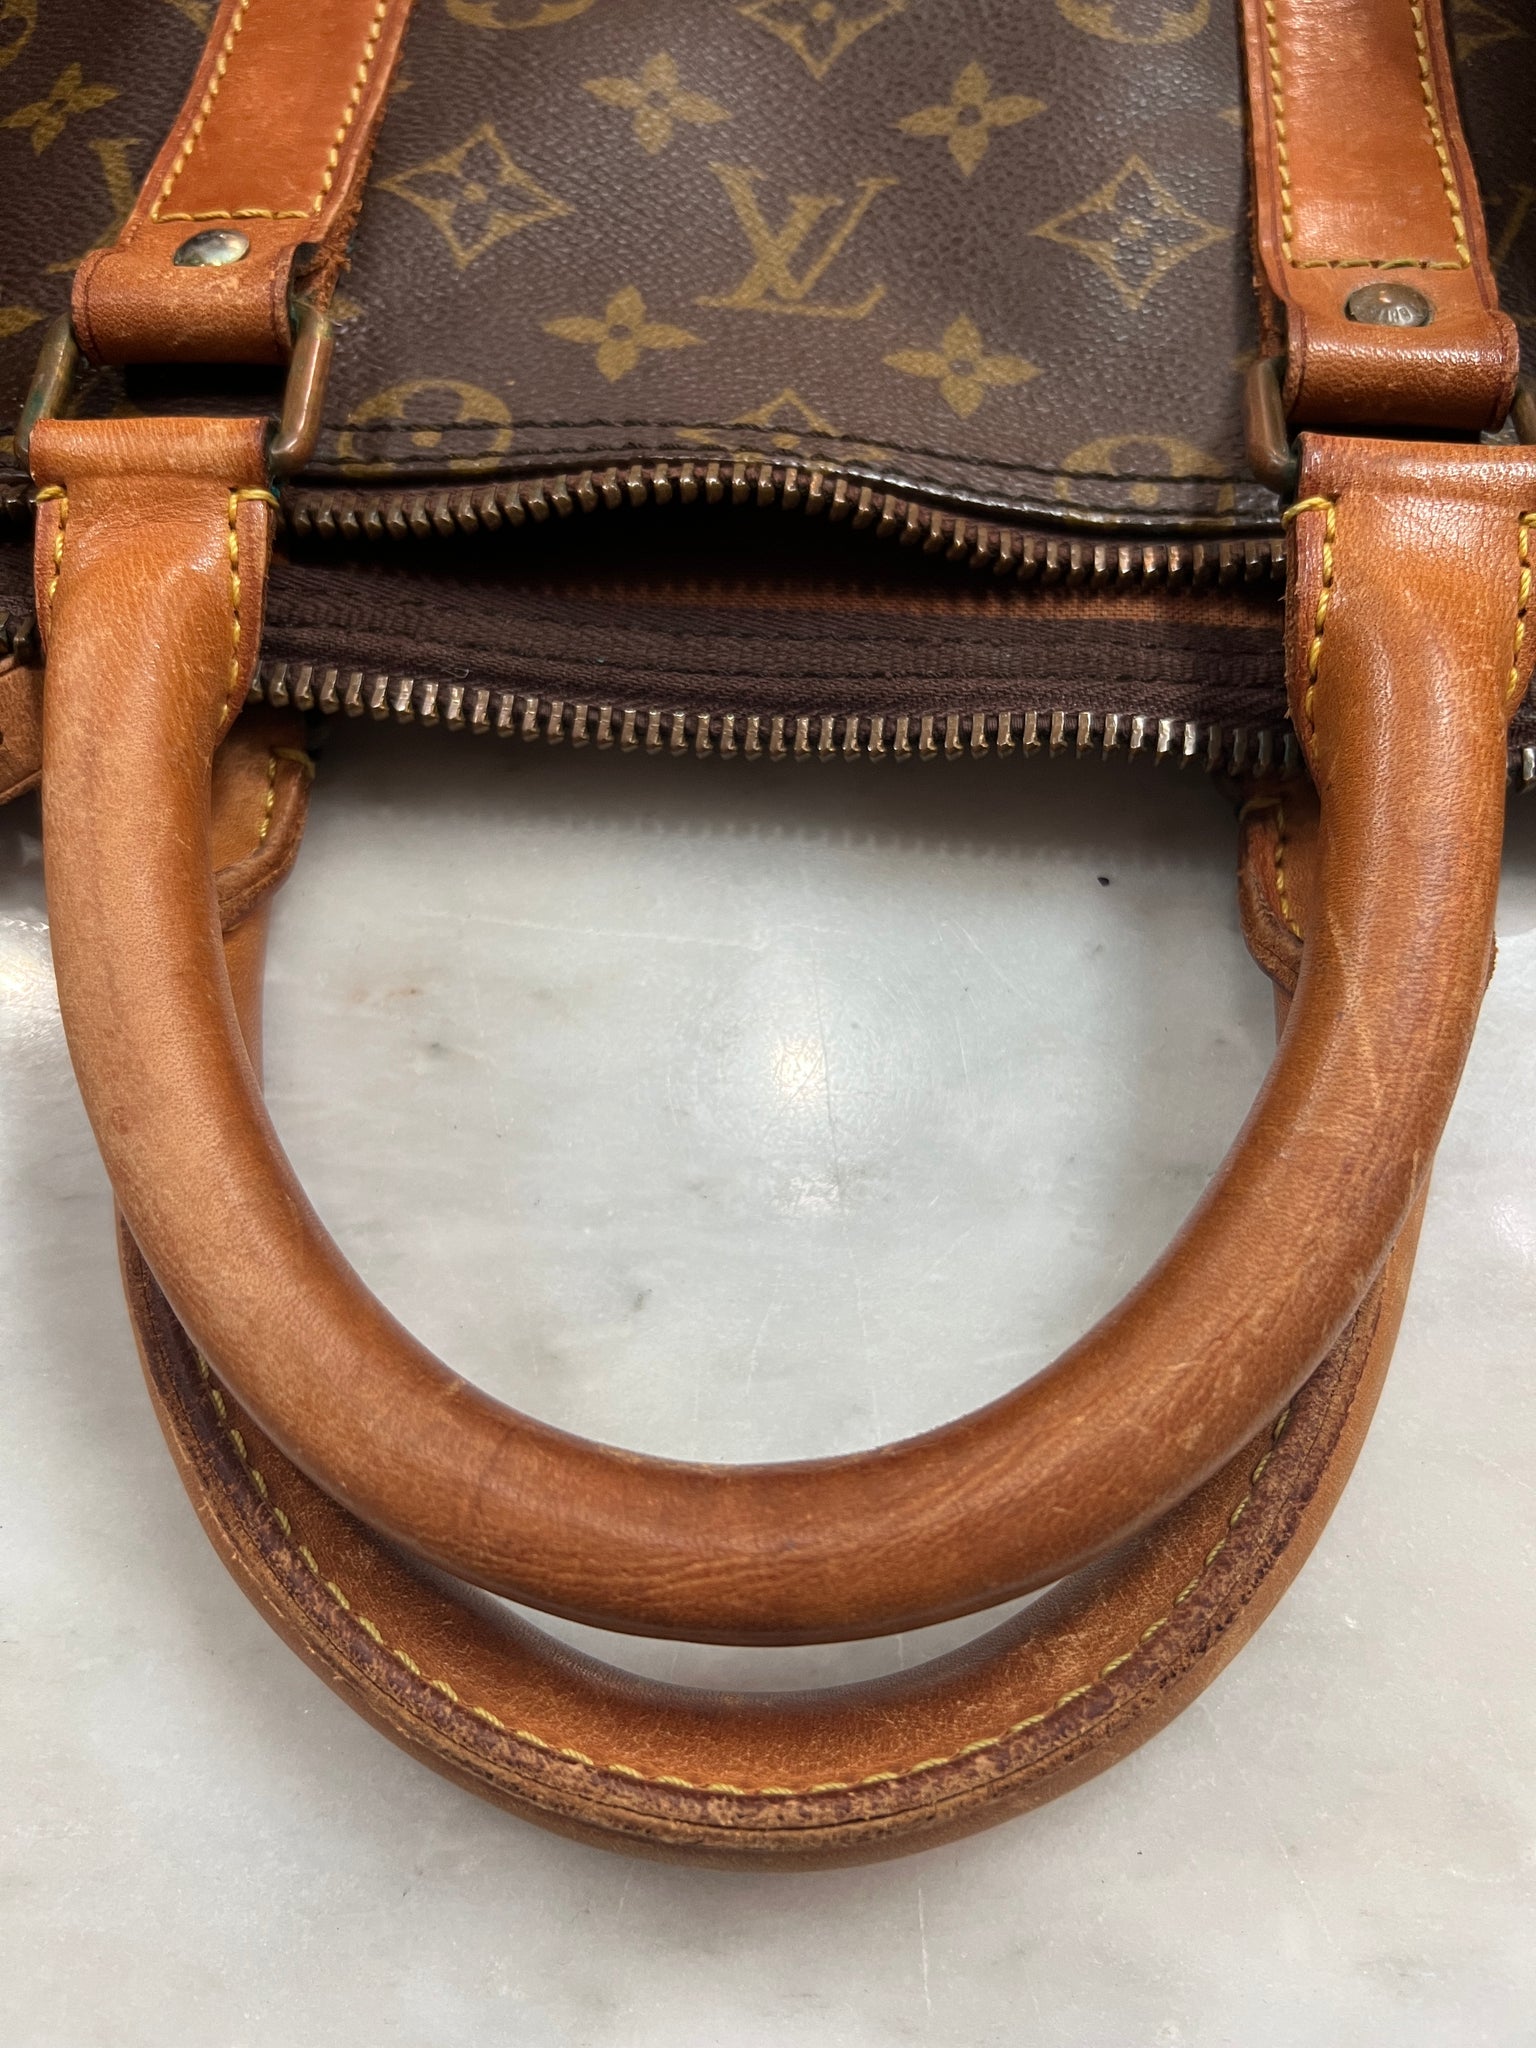 Louis Vuitton Keepall Travel bag 355668